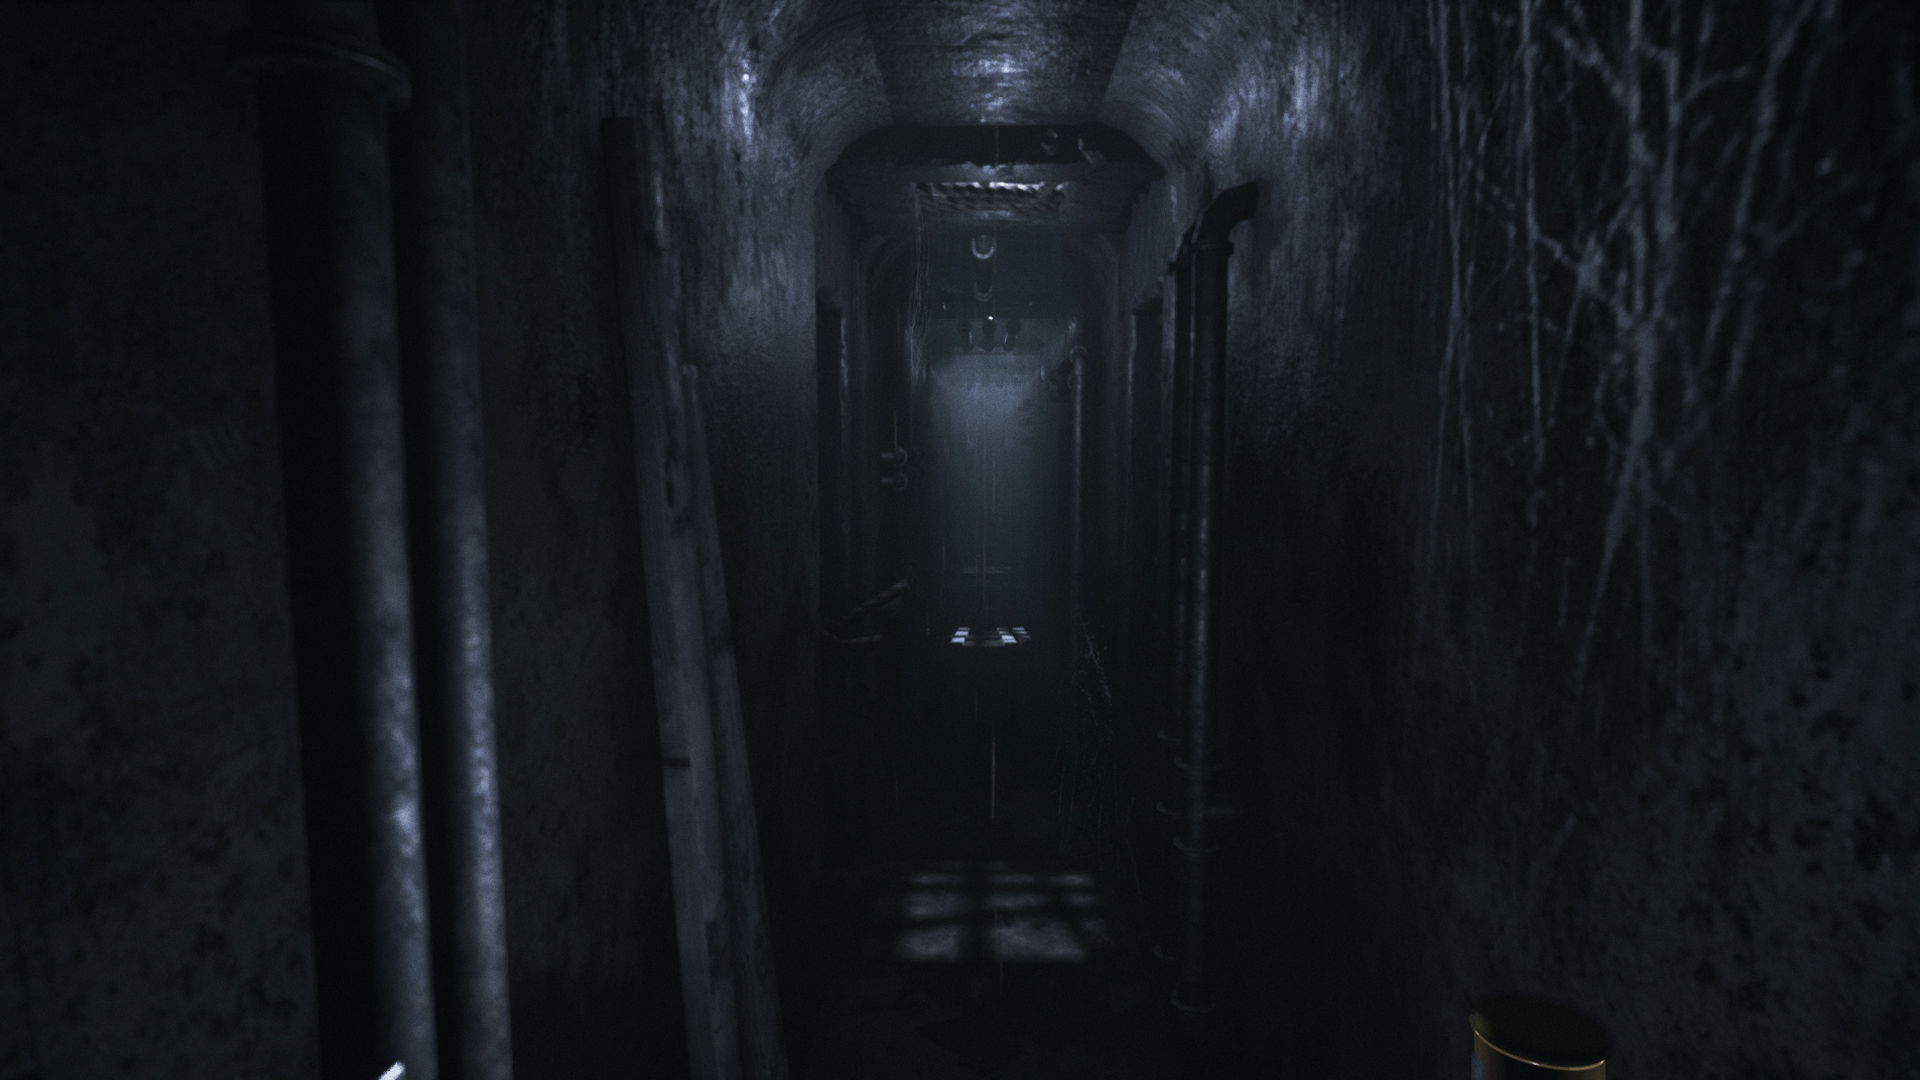 visage horror game release date